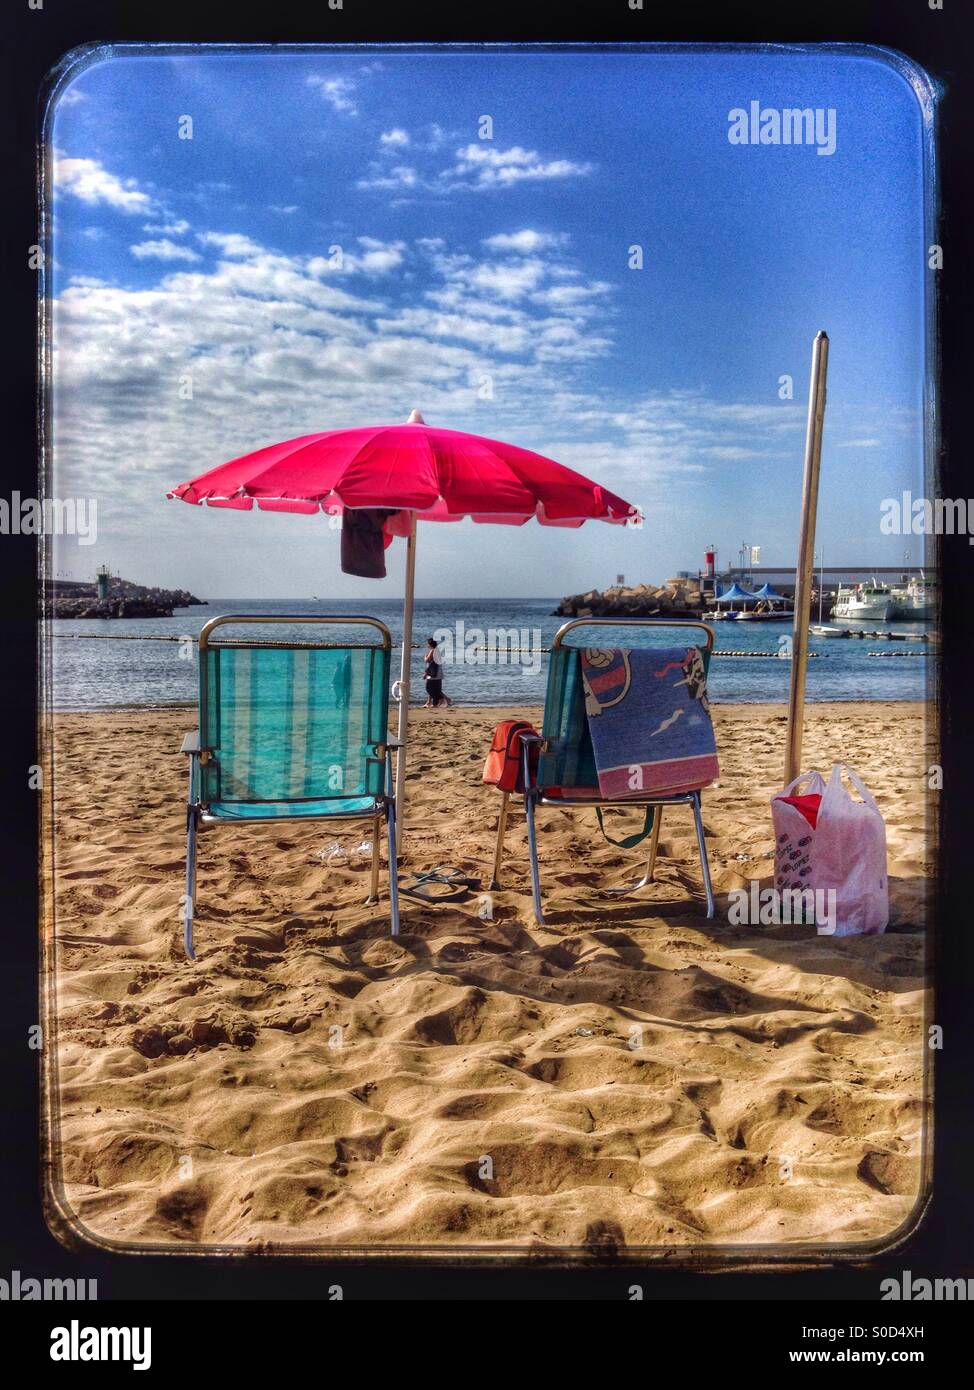 Red umbrella on the beach in Gran Canaria Stock Photo